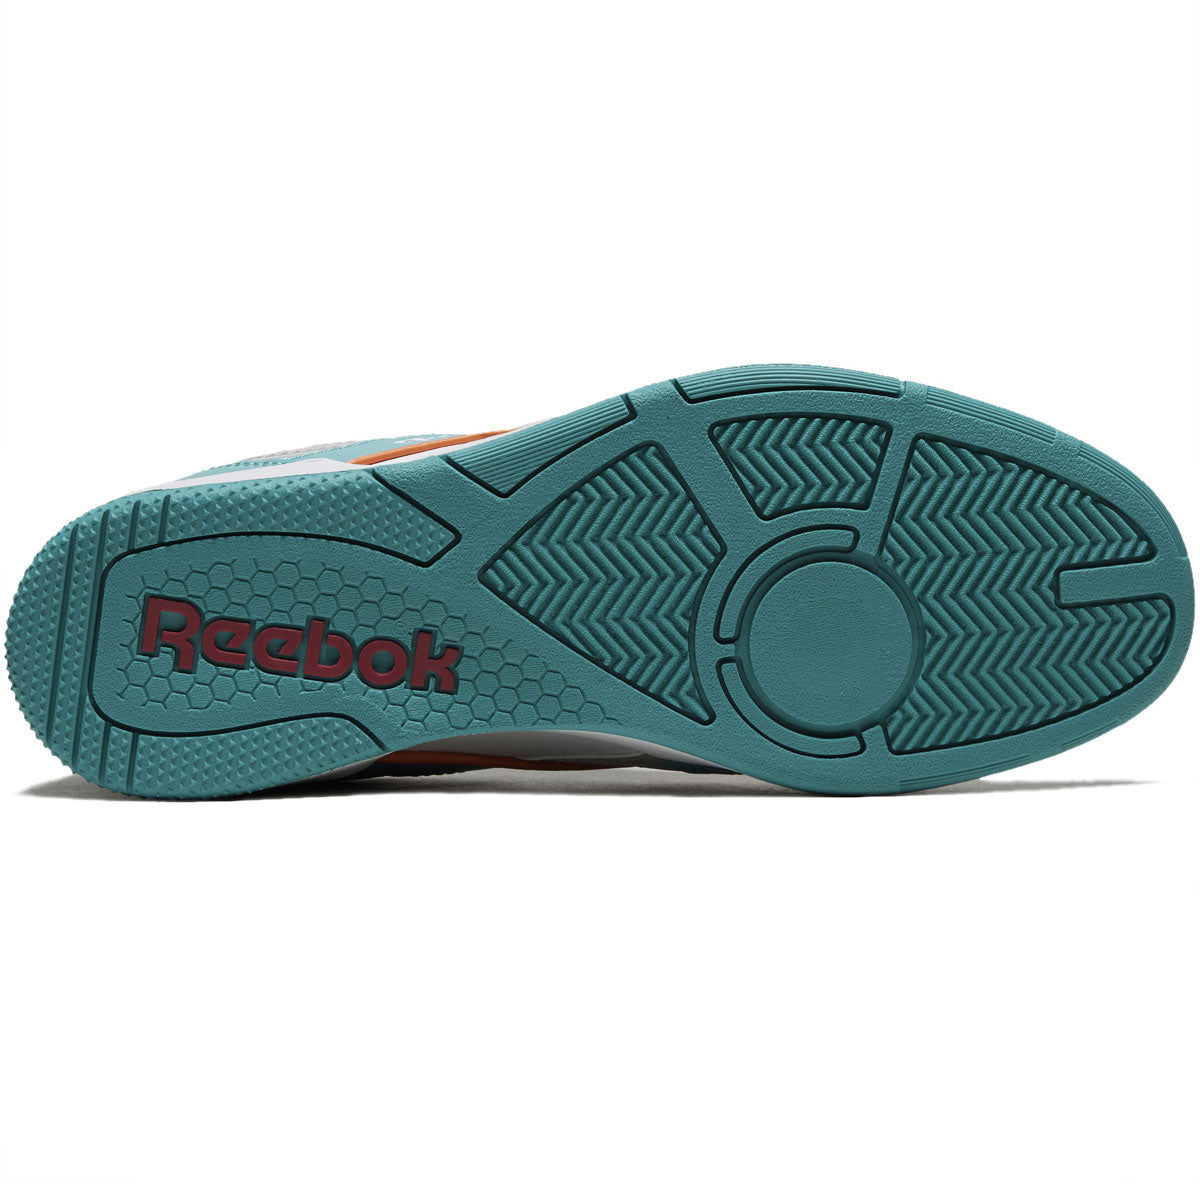 Reebok BB 4000 II Shoes - White/Teal/Fiery Orange image 4